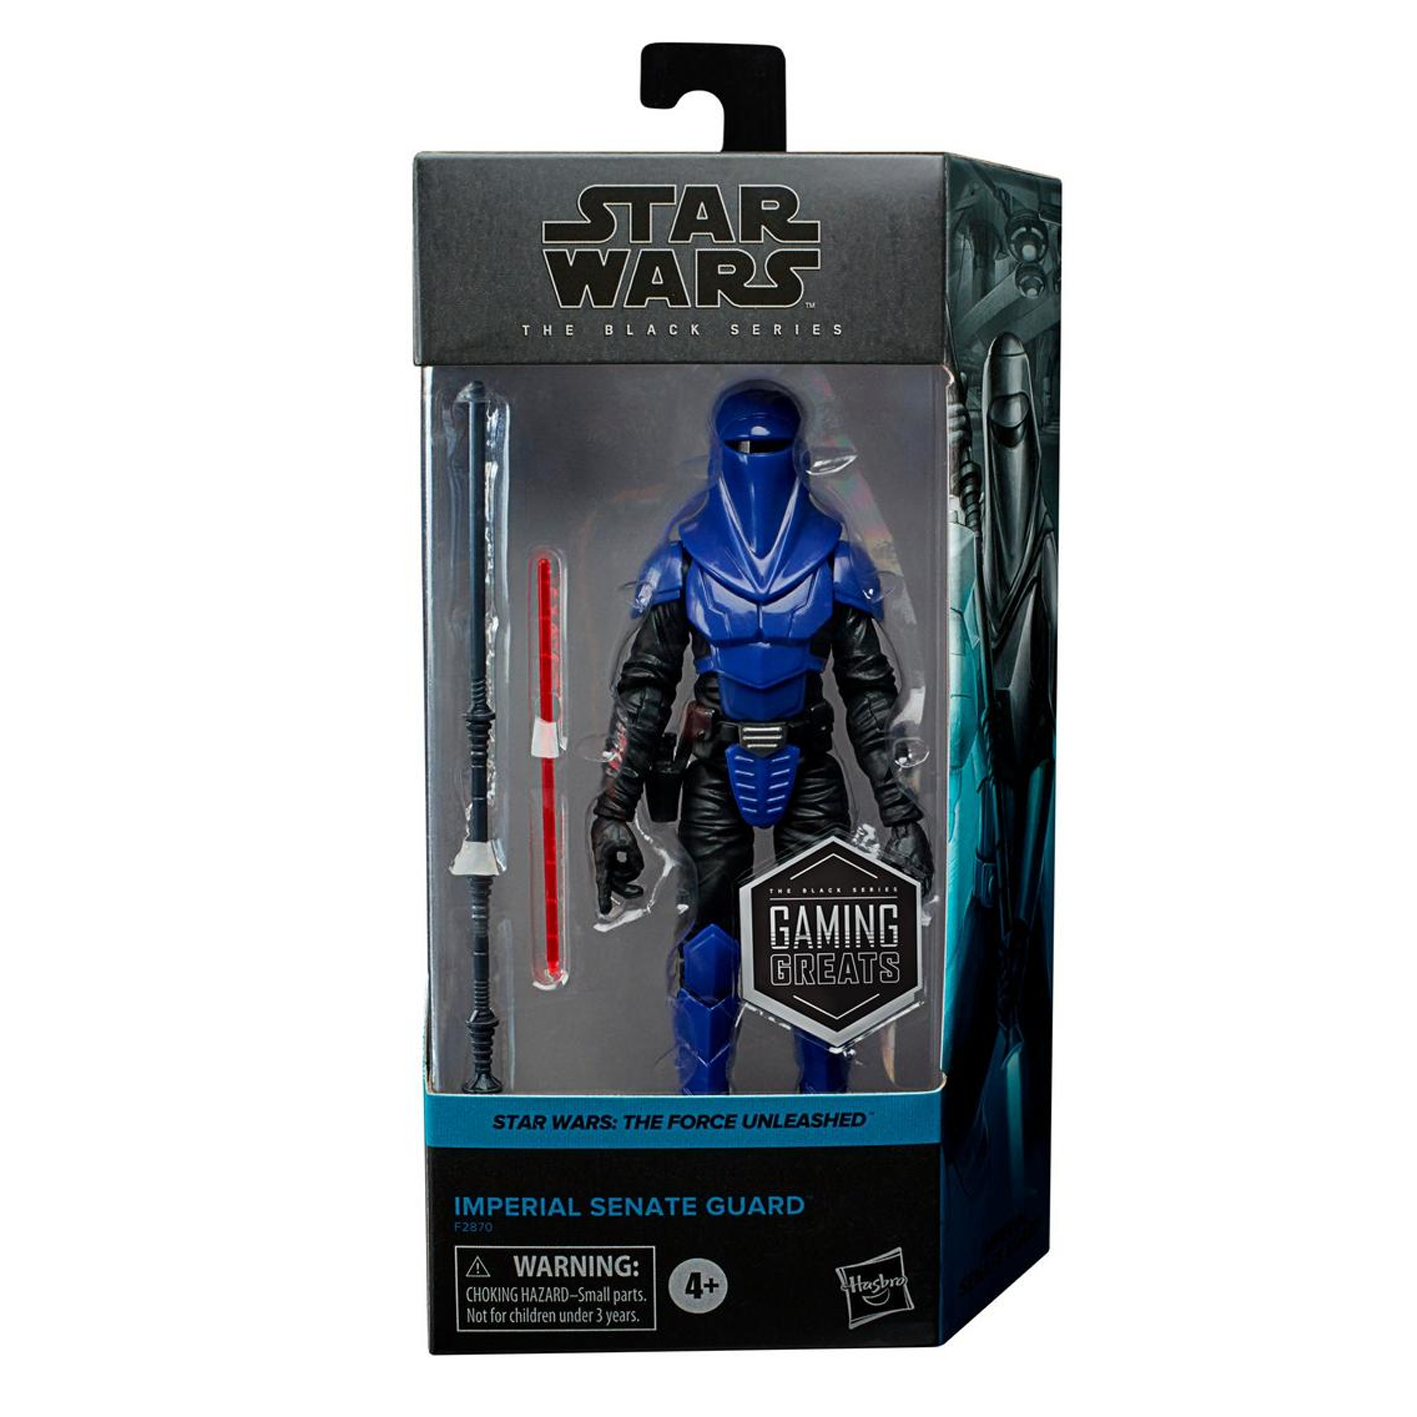 Imperial Senate Guard Star Wars The Black Series